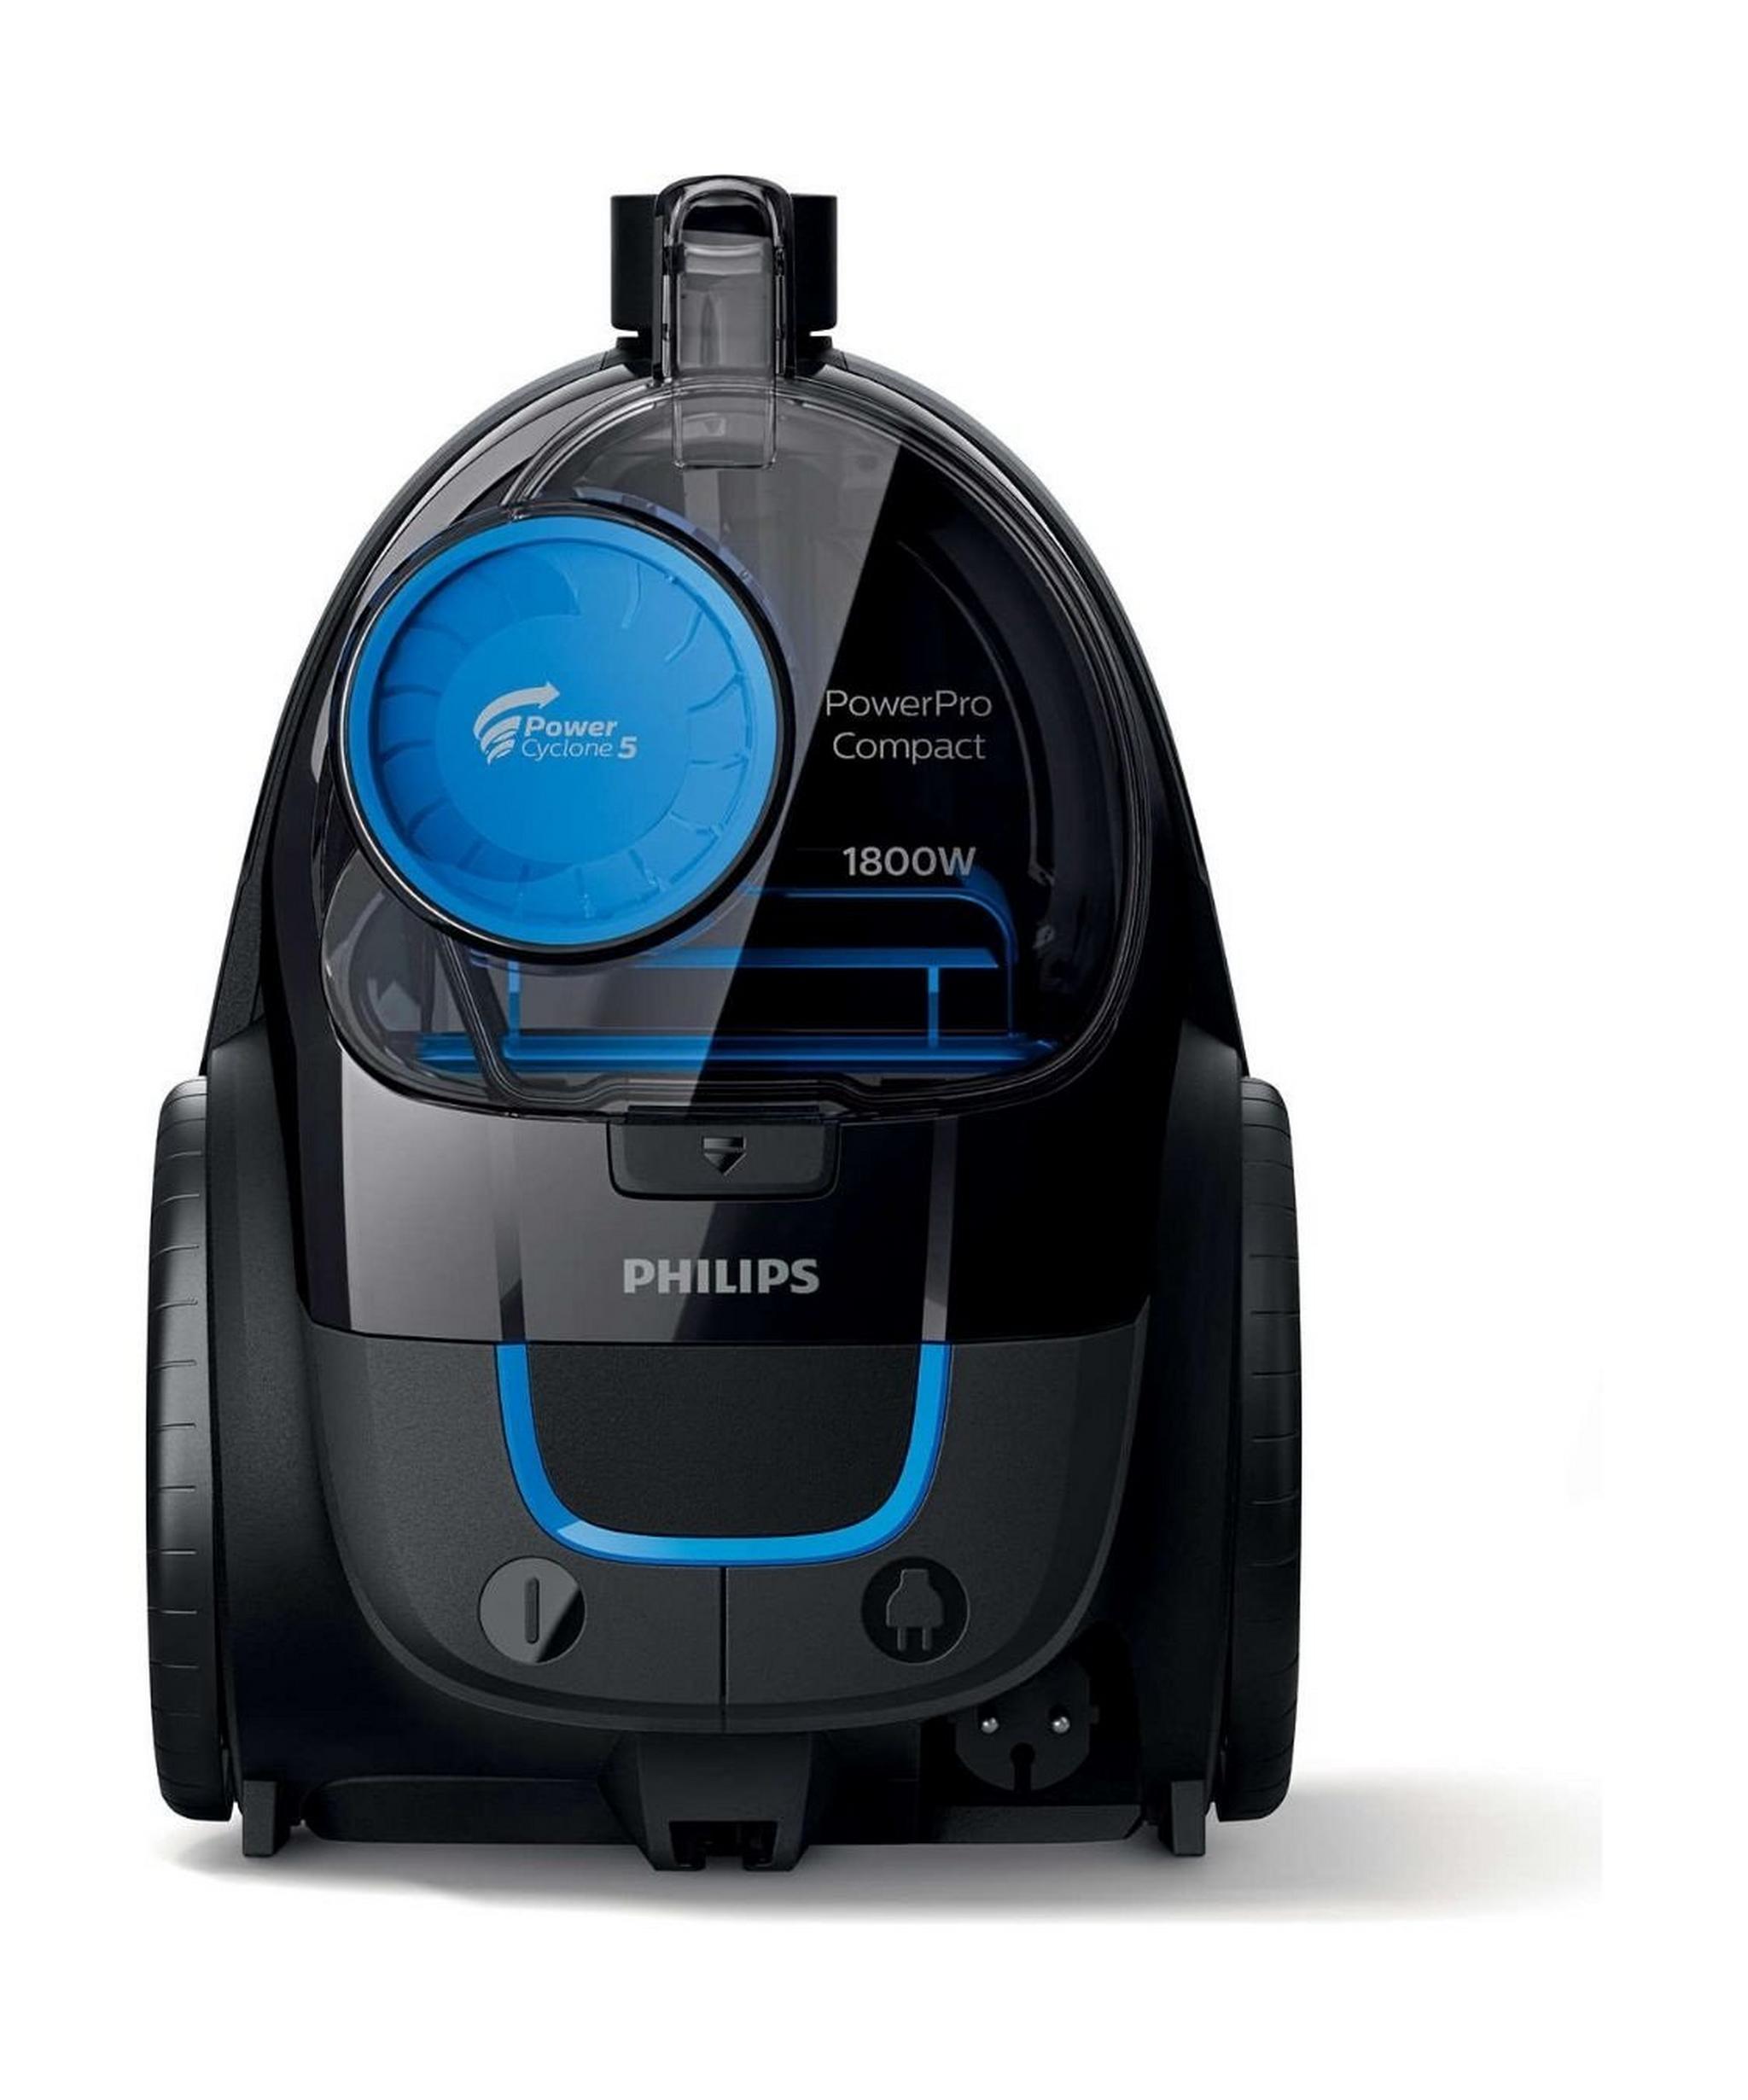 Philips 1800 W PowerPro Compact Bagless Vaccum Cleaner (FC9350) - Deep Black